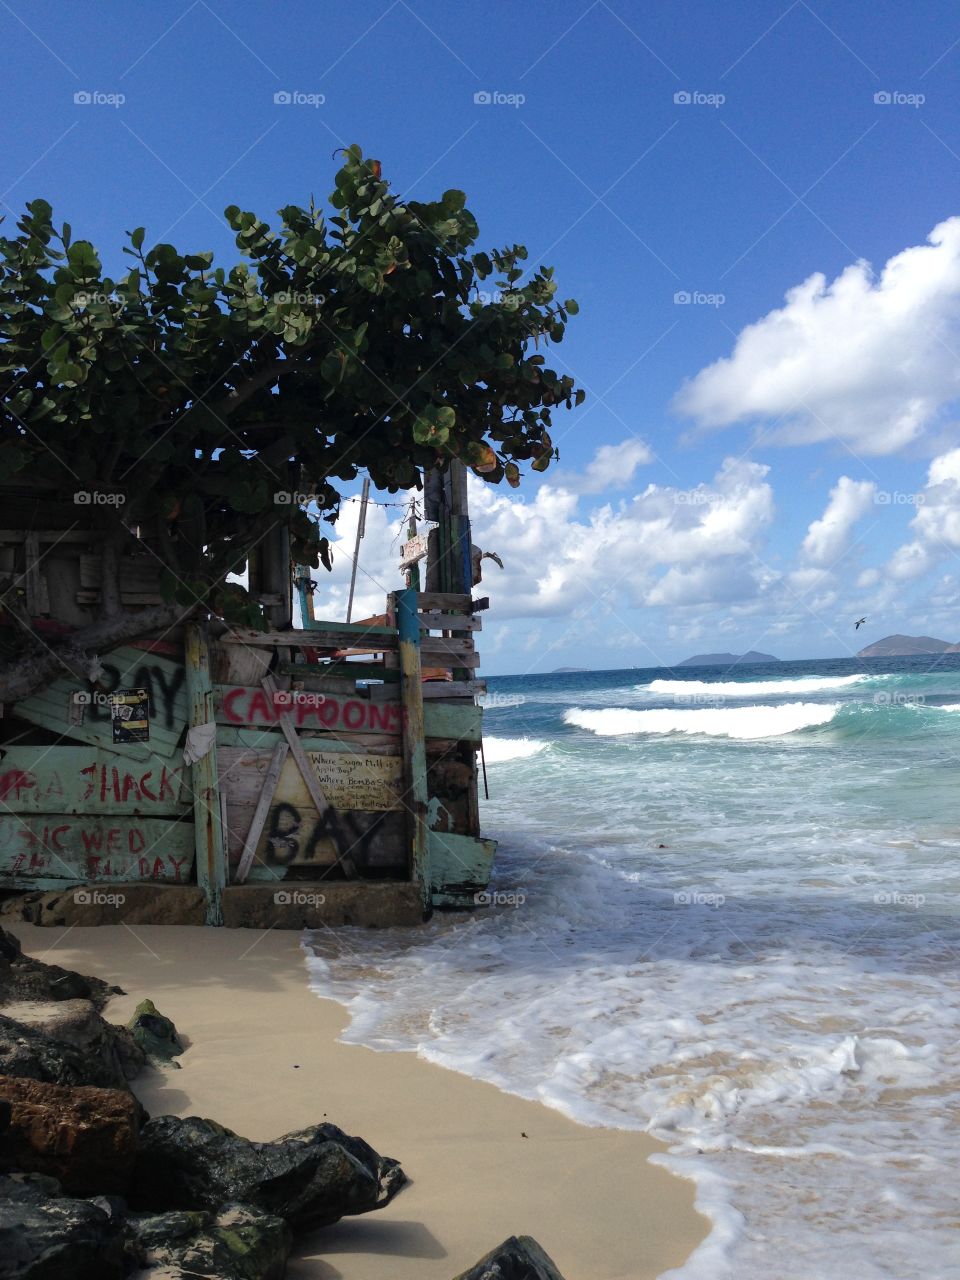 Bomba shack . British Virgin Islands, Bomba Shack. Where the tea is free!! 